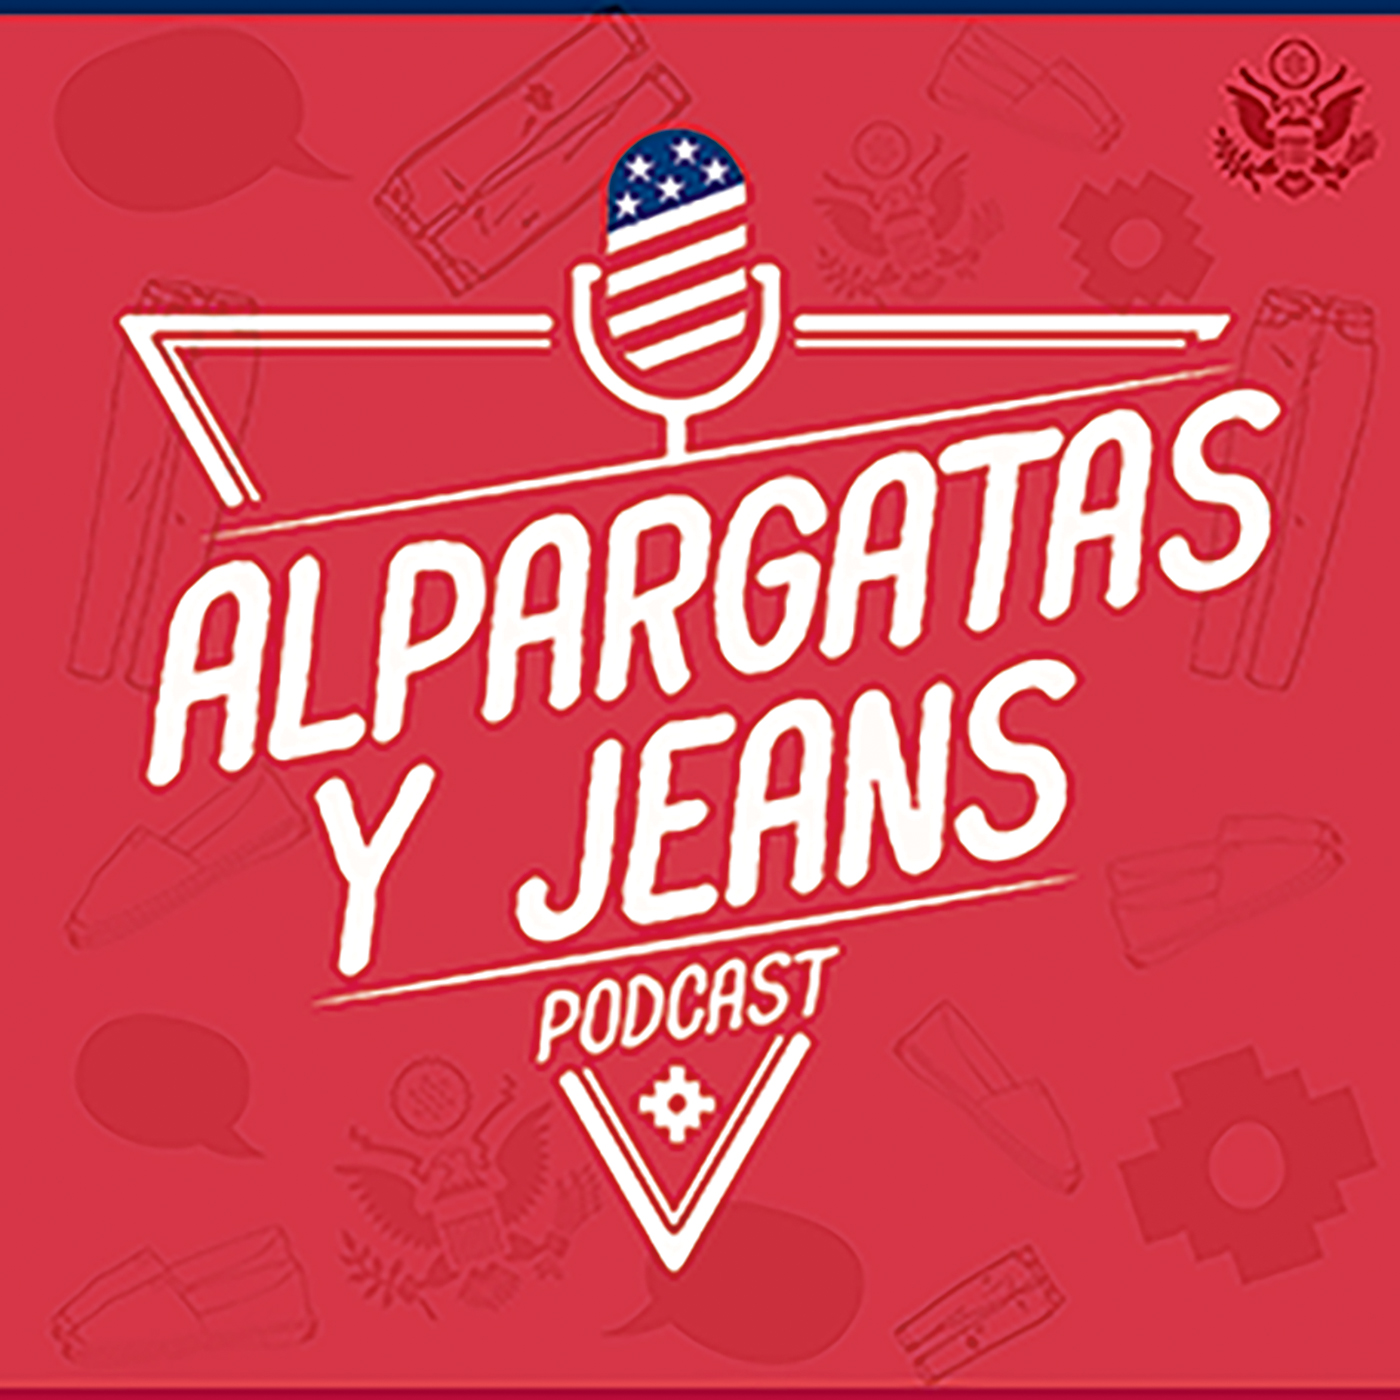 Artwork for Alpargatas y Jeans